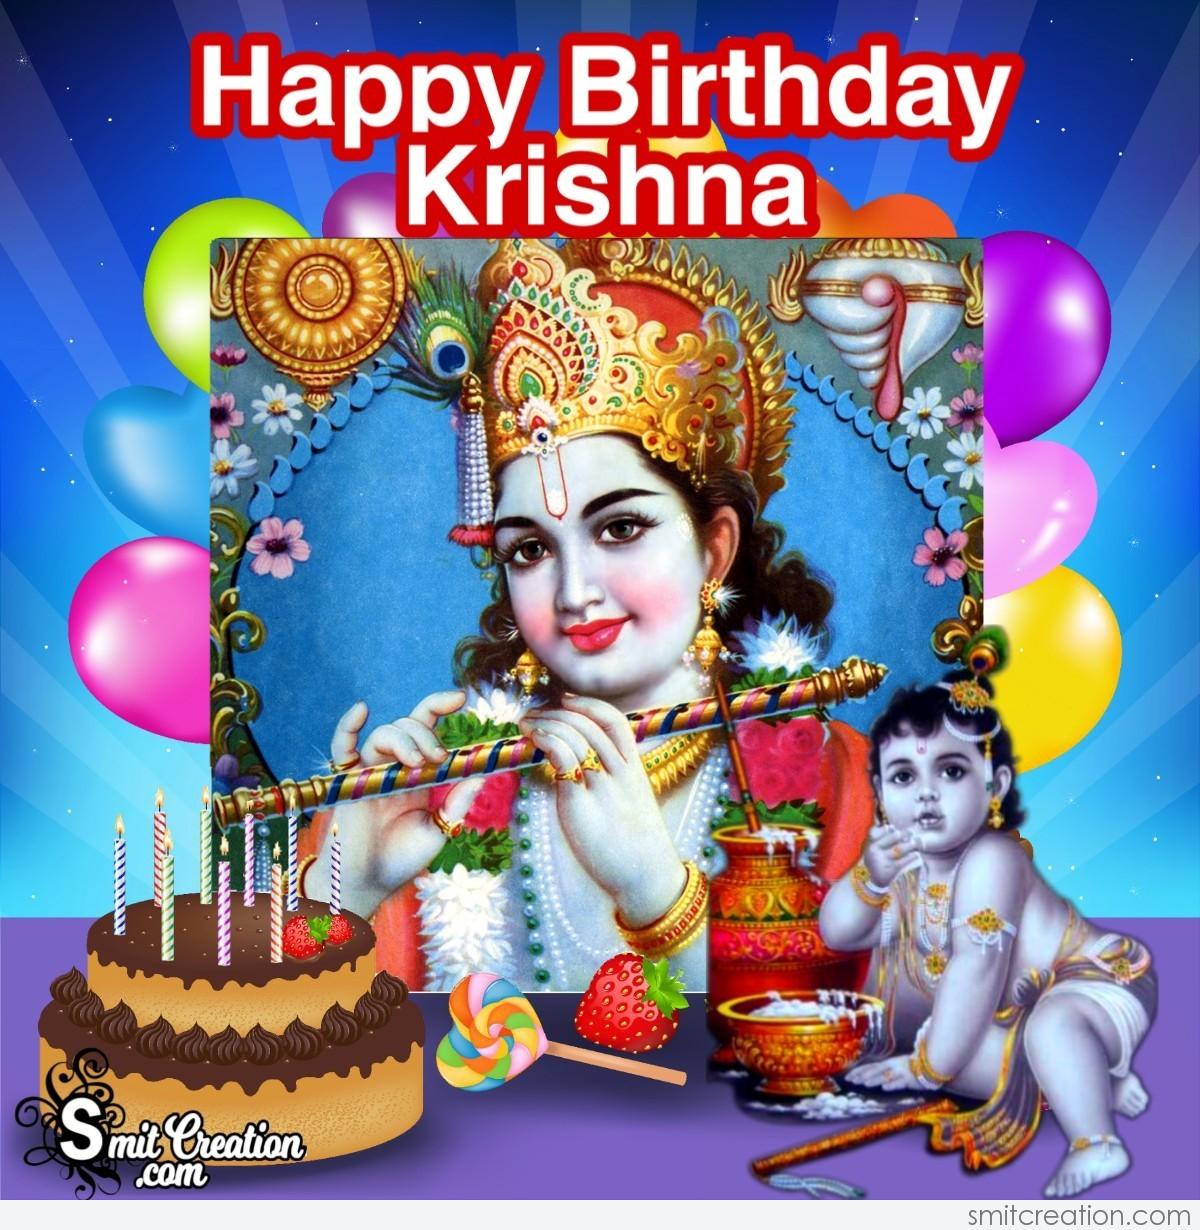 Happy Birthday Krishna Card For Wish - SmitCreation.com